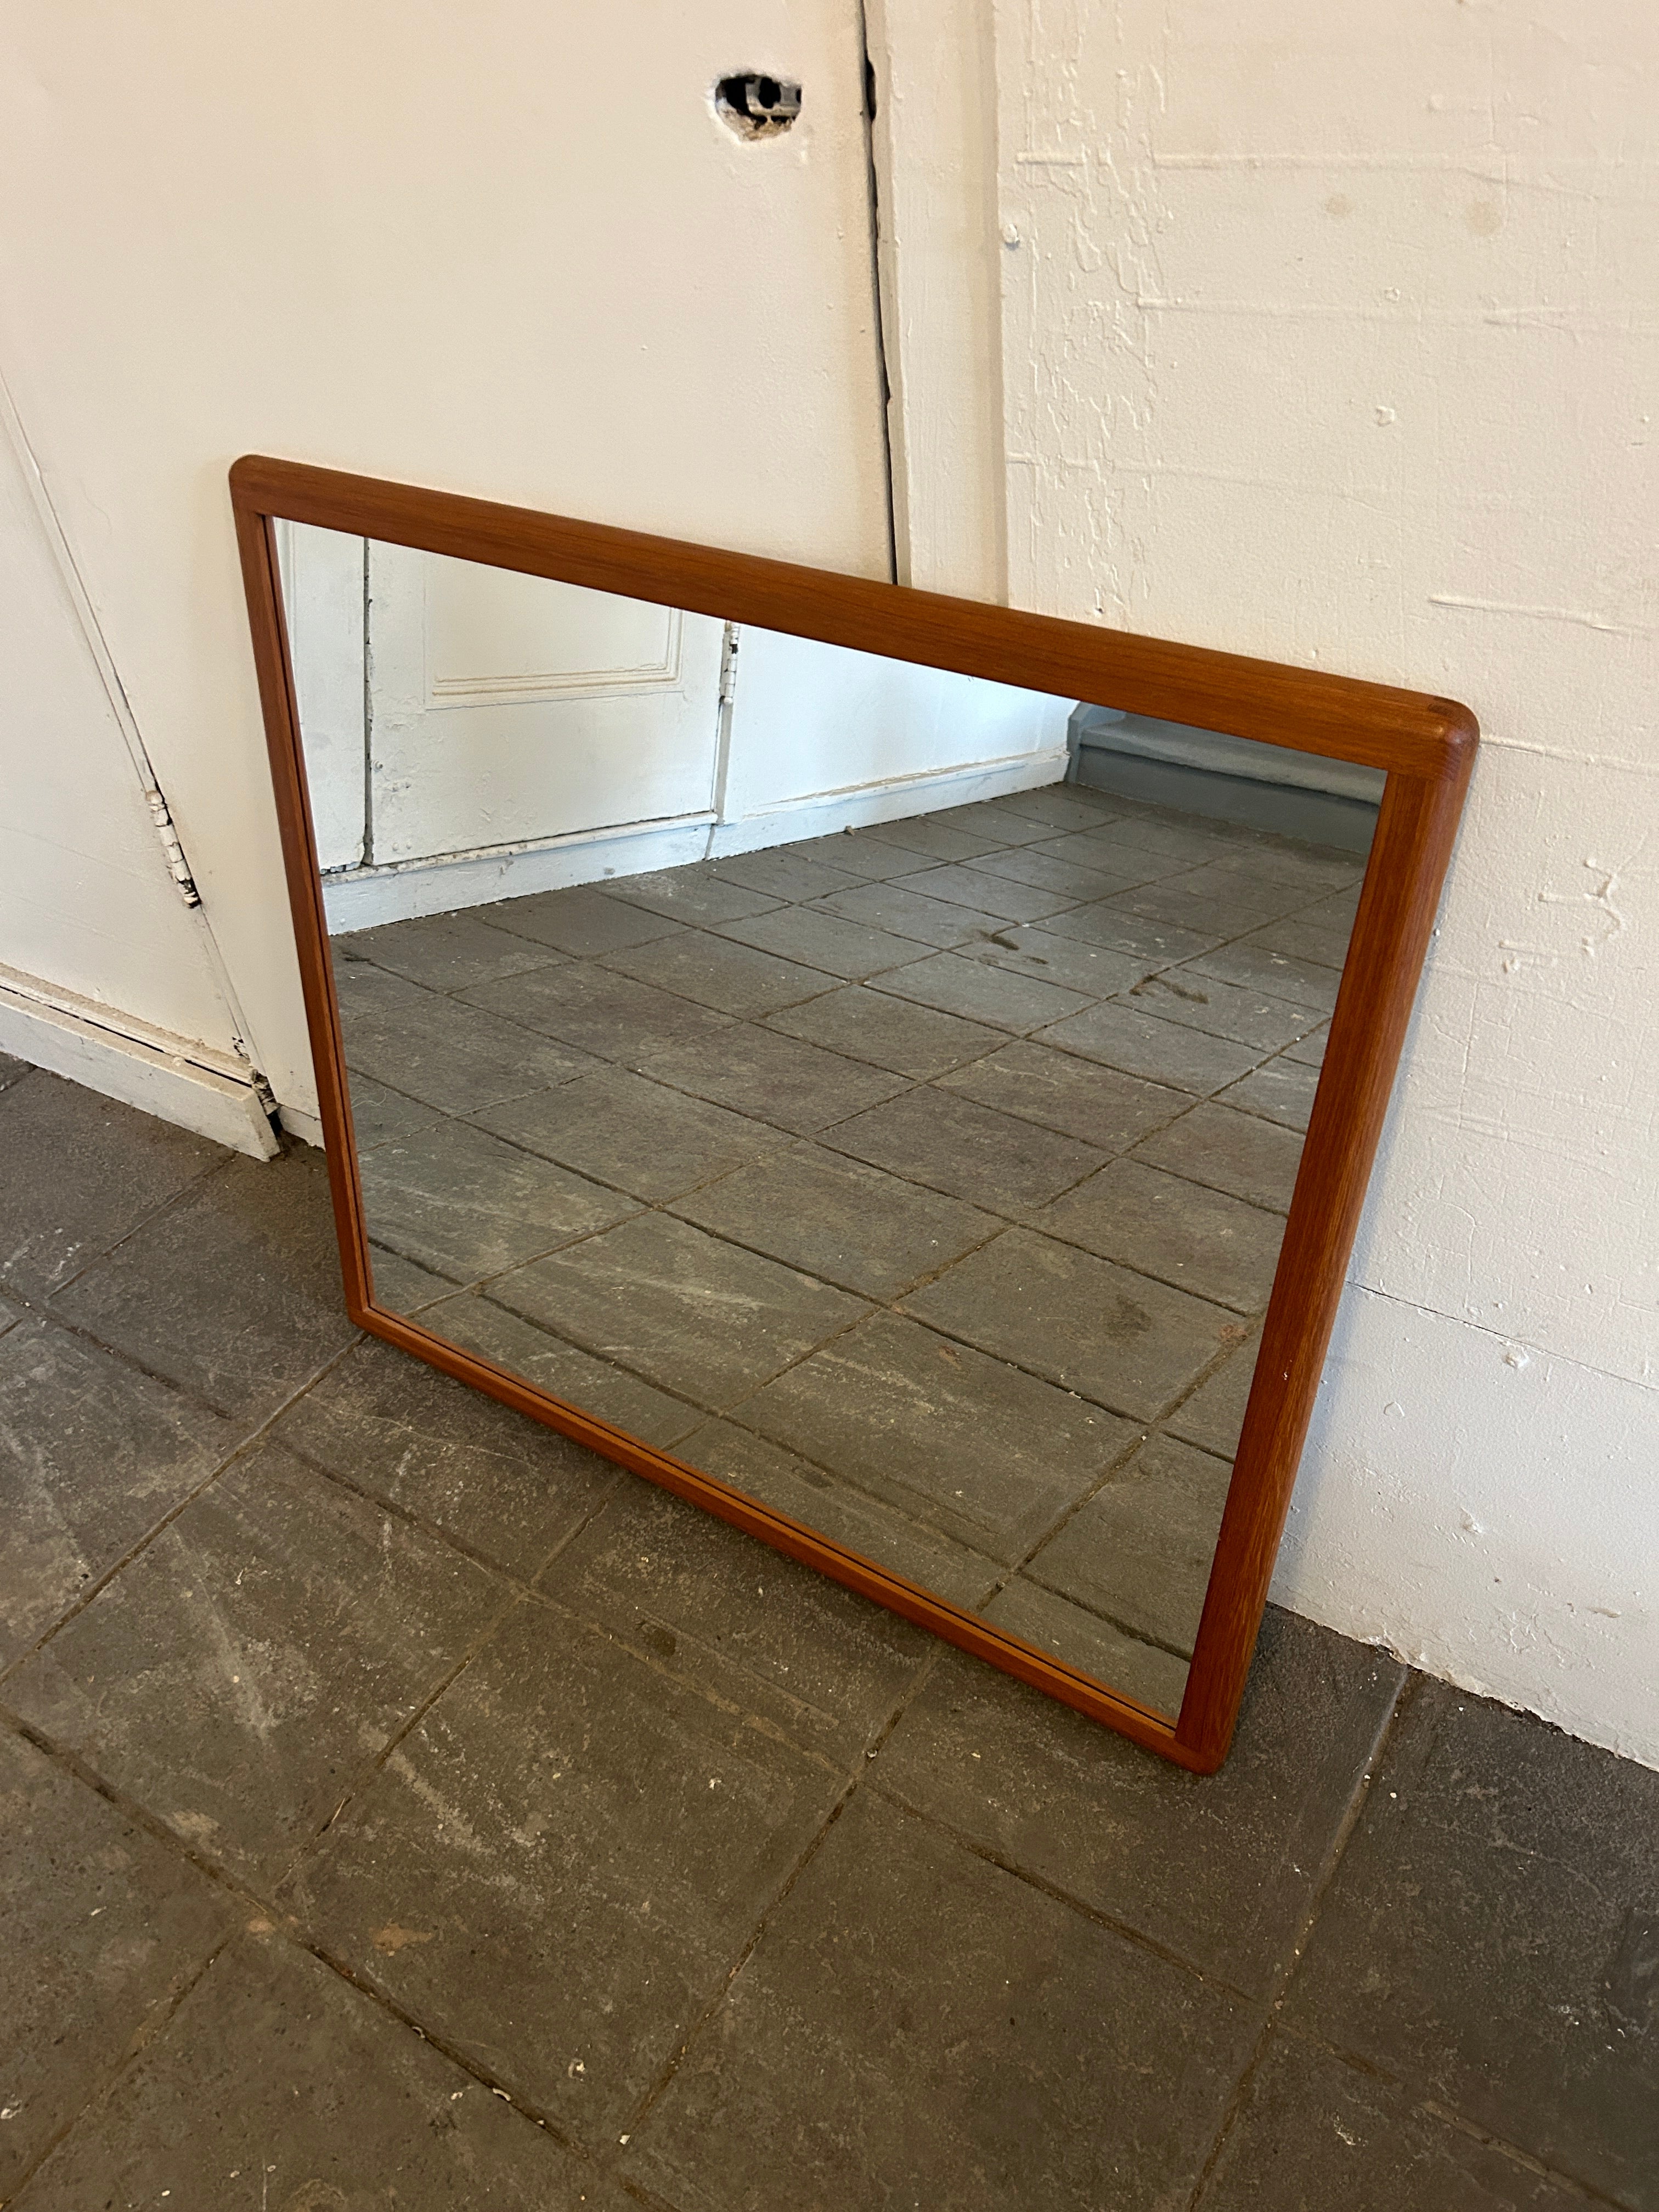 Wonderful Scandinavian Danish modern teak wood mirror. Wired to hang horizontal. Very solid mirror with solid teak wood frame.

 31” x 35” x 1” deep.

 